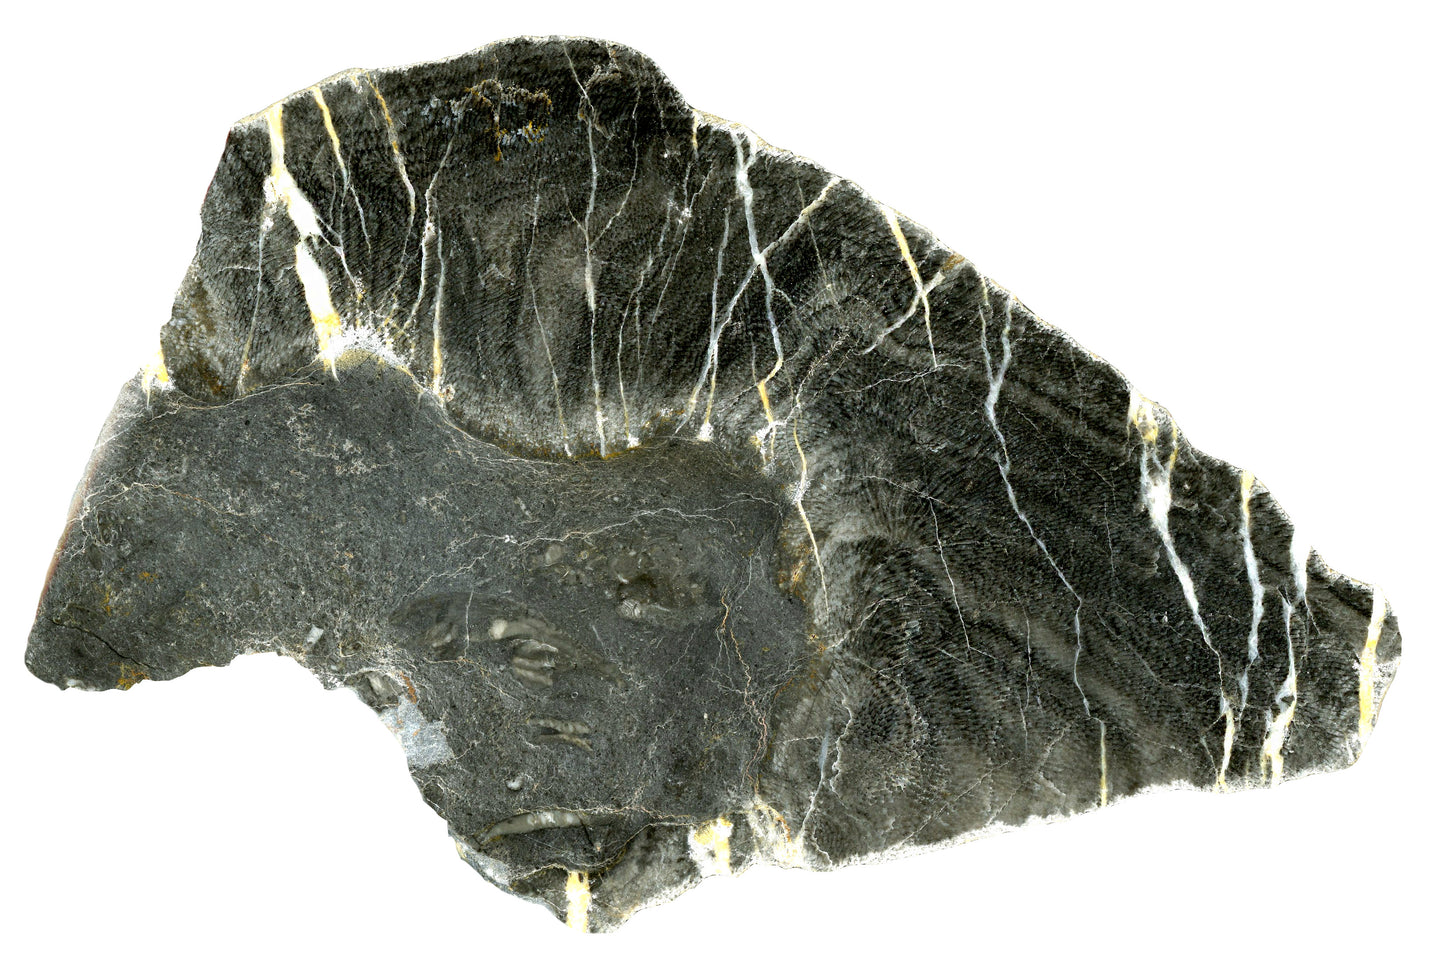 Lažánec limestone with plate coral of the genus Alveolites, Moravian Karst